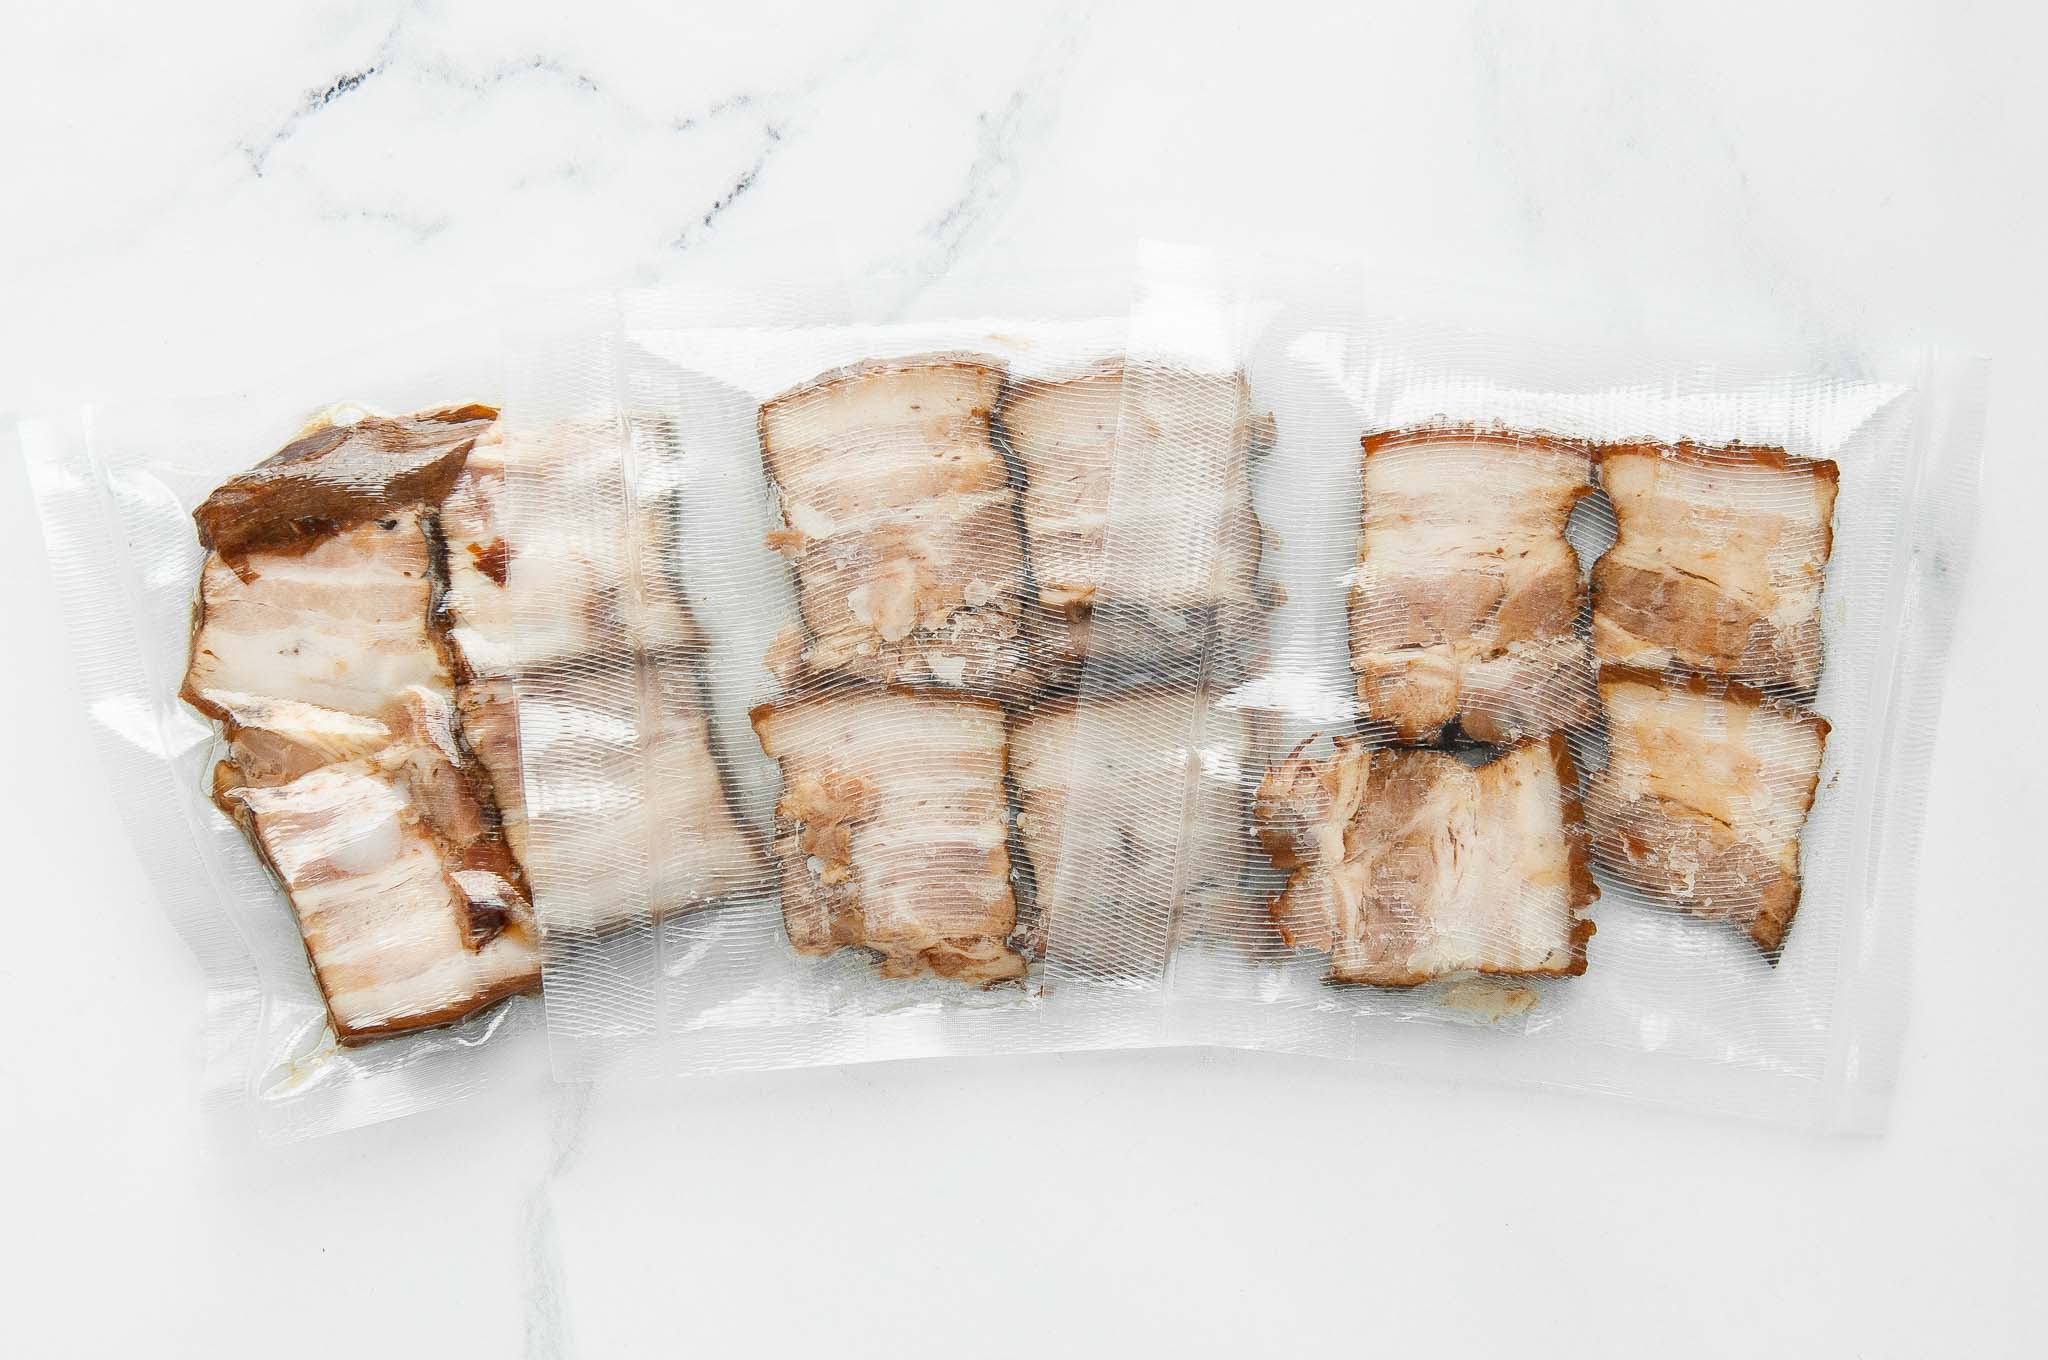 freezing chashu pork in freezer bags